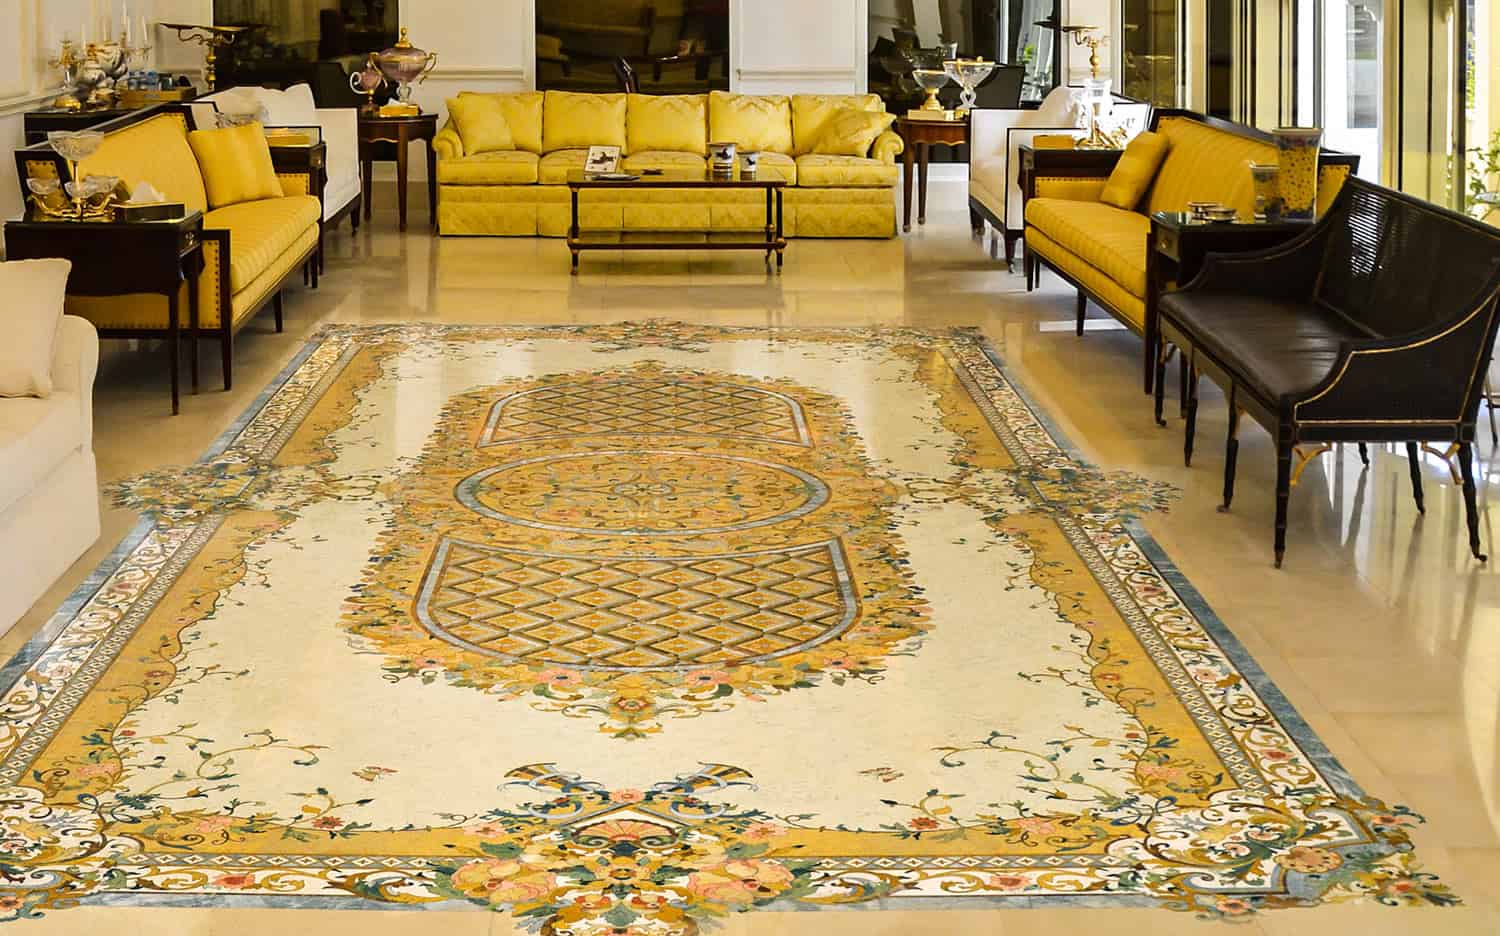 An artistic carpet marble flooring